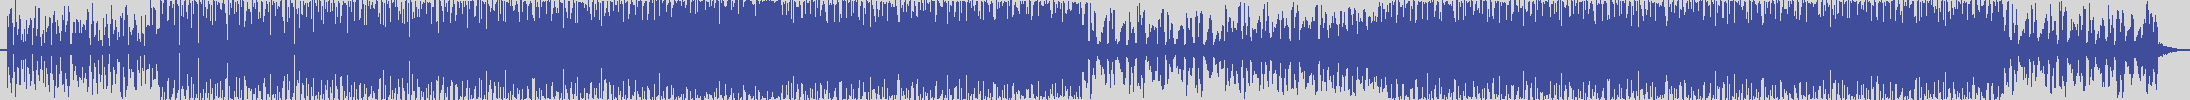 nf_boyz_records [NFY049] Meikafutoku - Wellness [E & Elements Mix] audio wave form